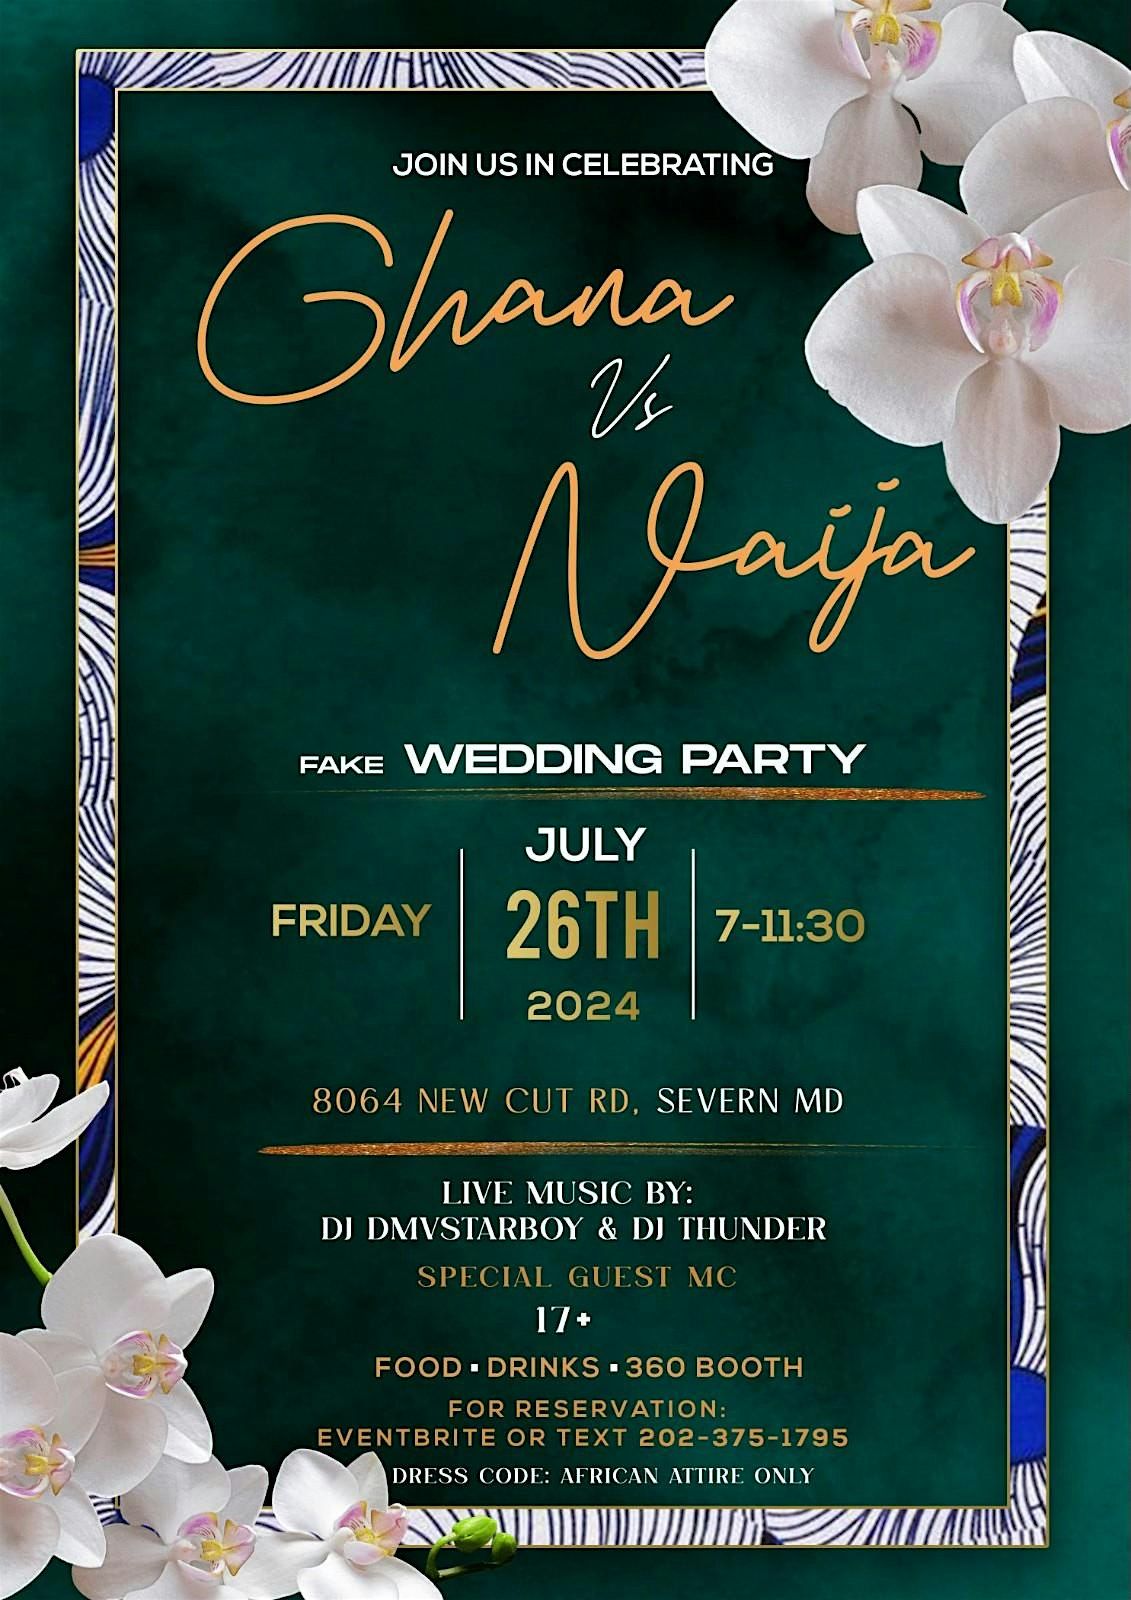 Ghana Vs Najia  FAKE WEDDING PARTY